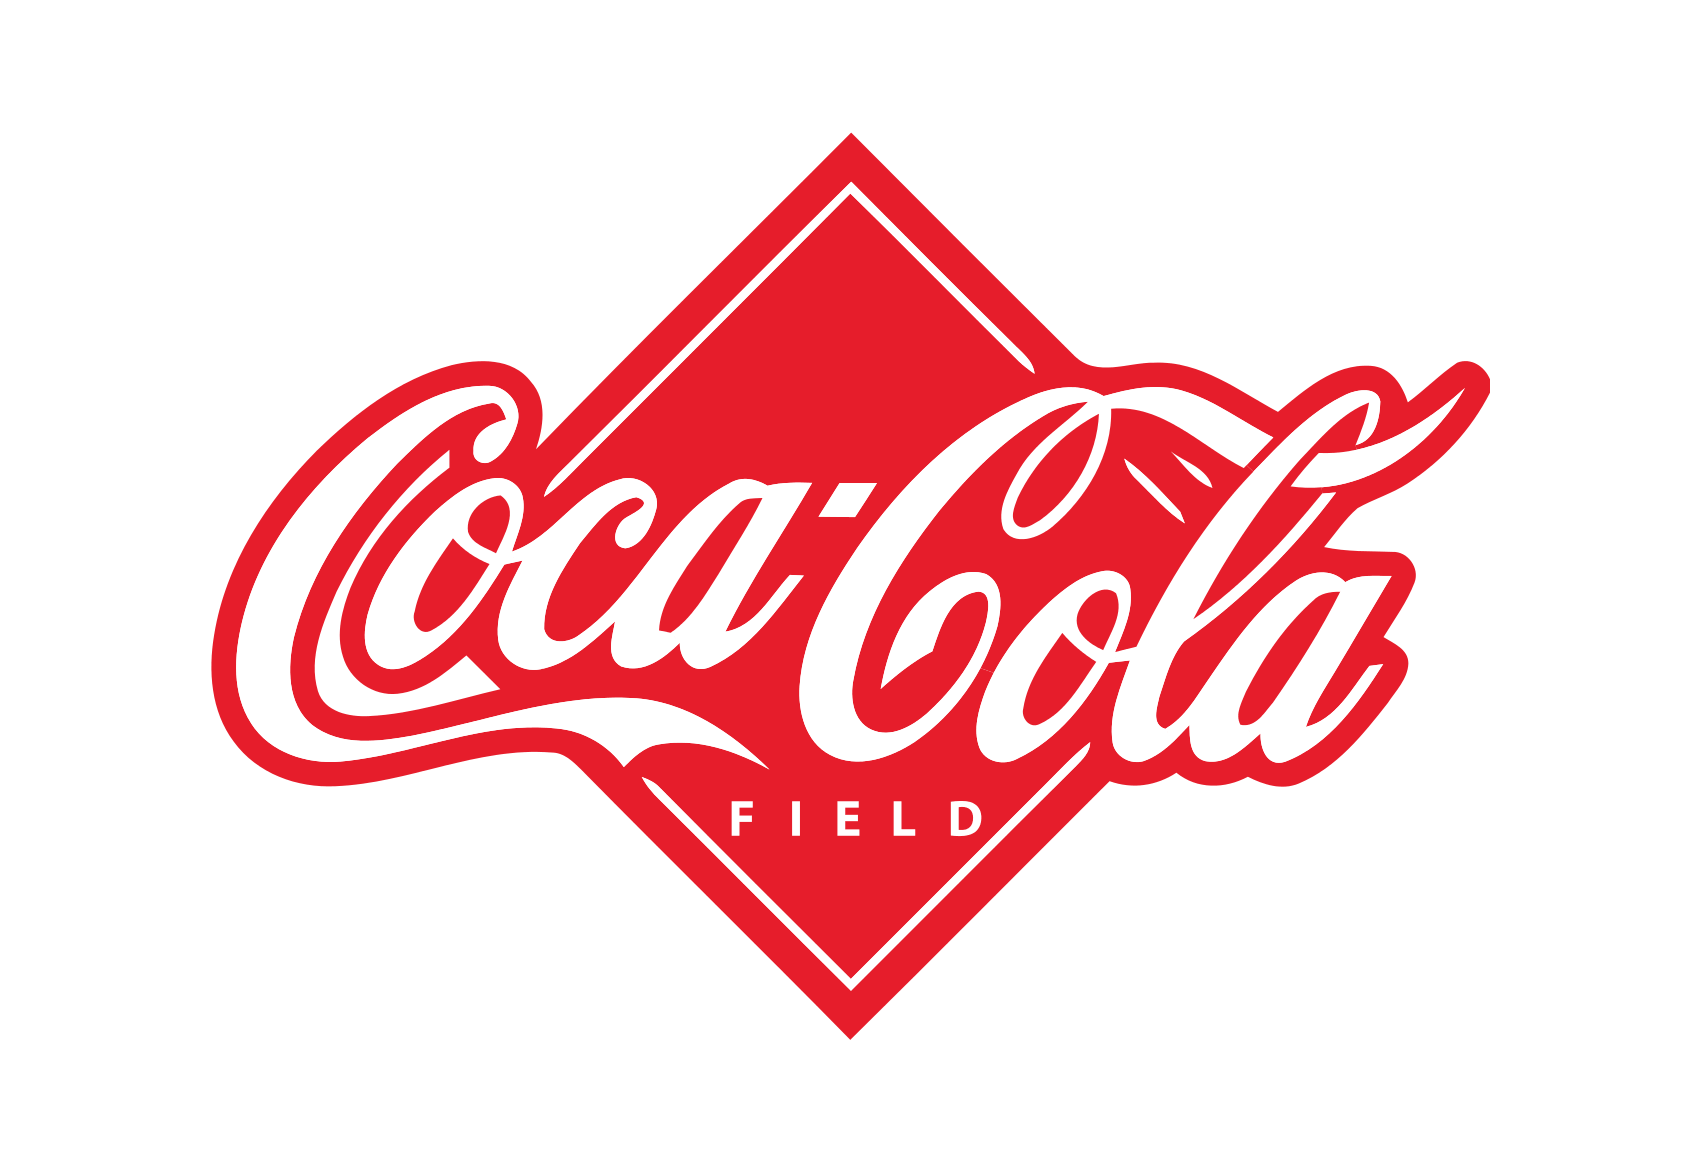 Cocola Logo - Coca-Cola logo | Dwglogo